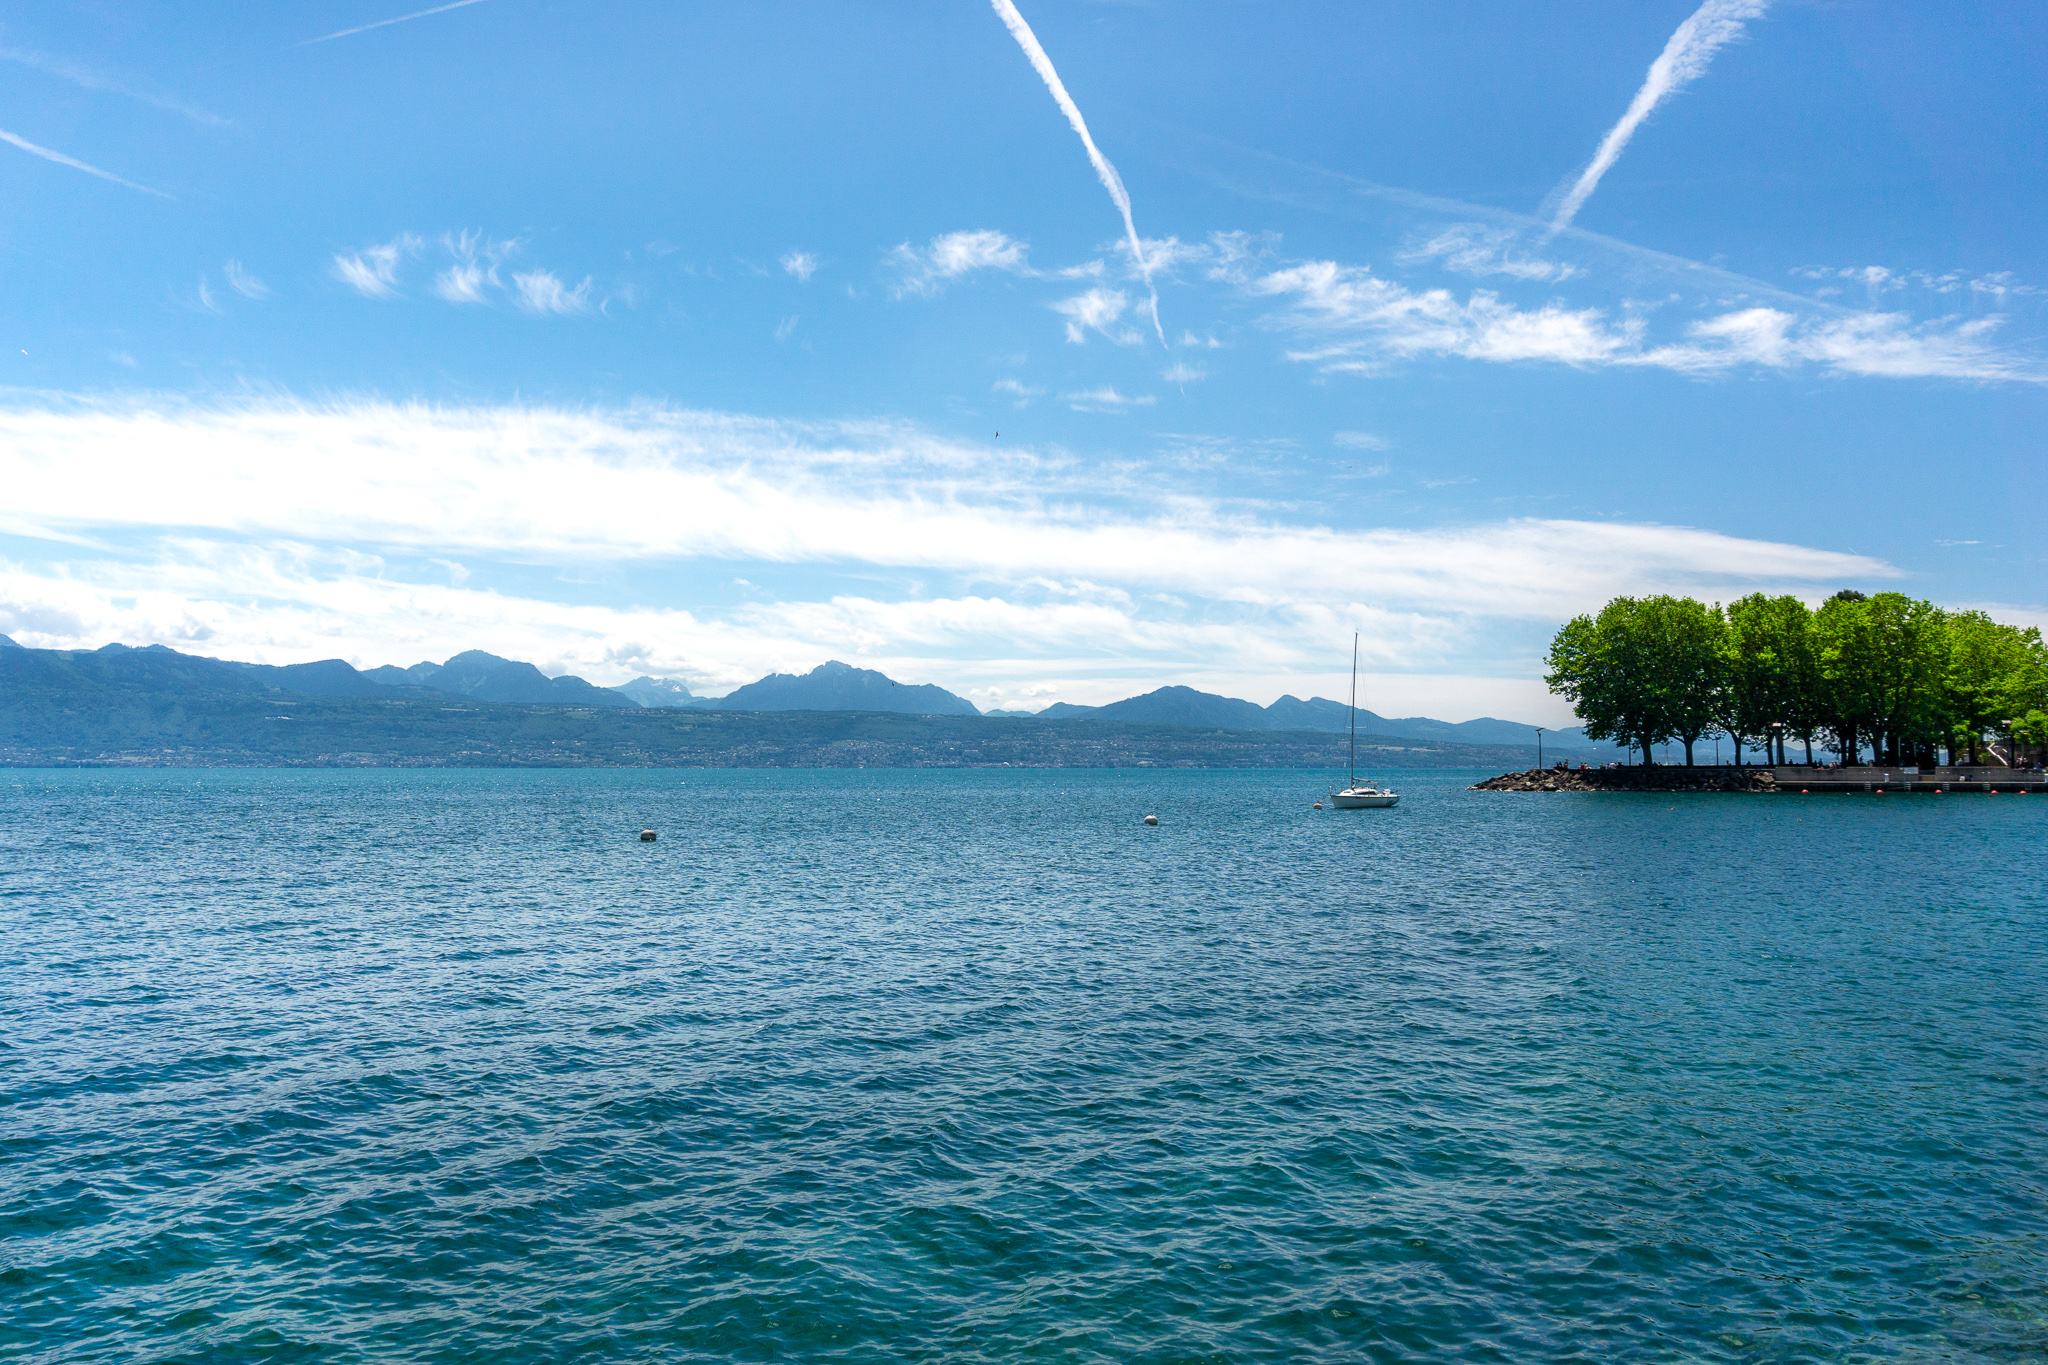 Spectacular views over Lake Geneva Shores in Lausanne, Switzerland